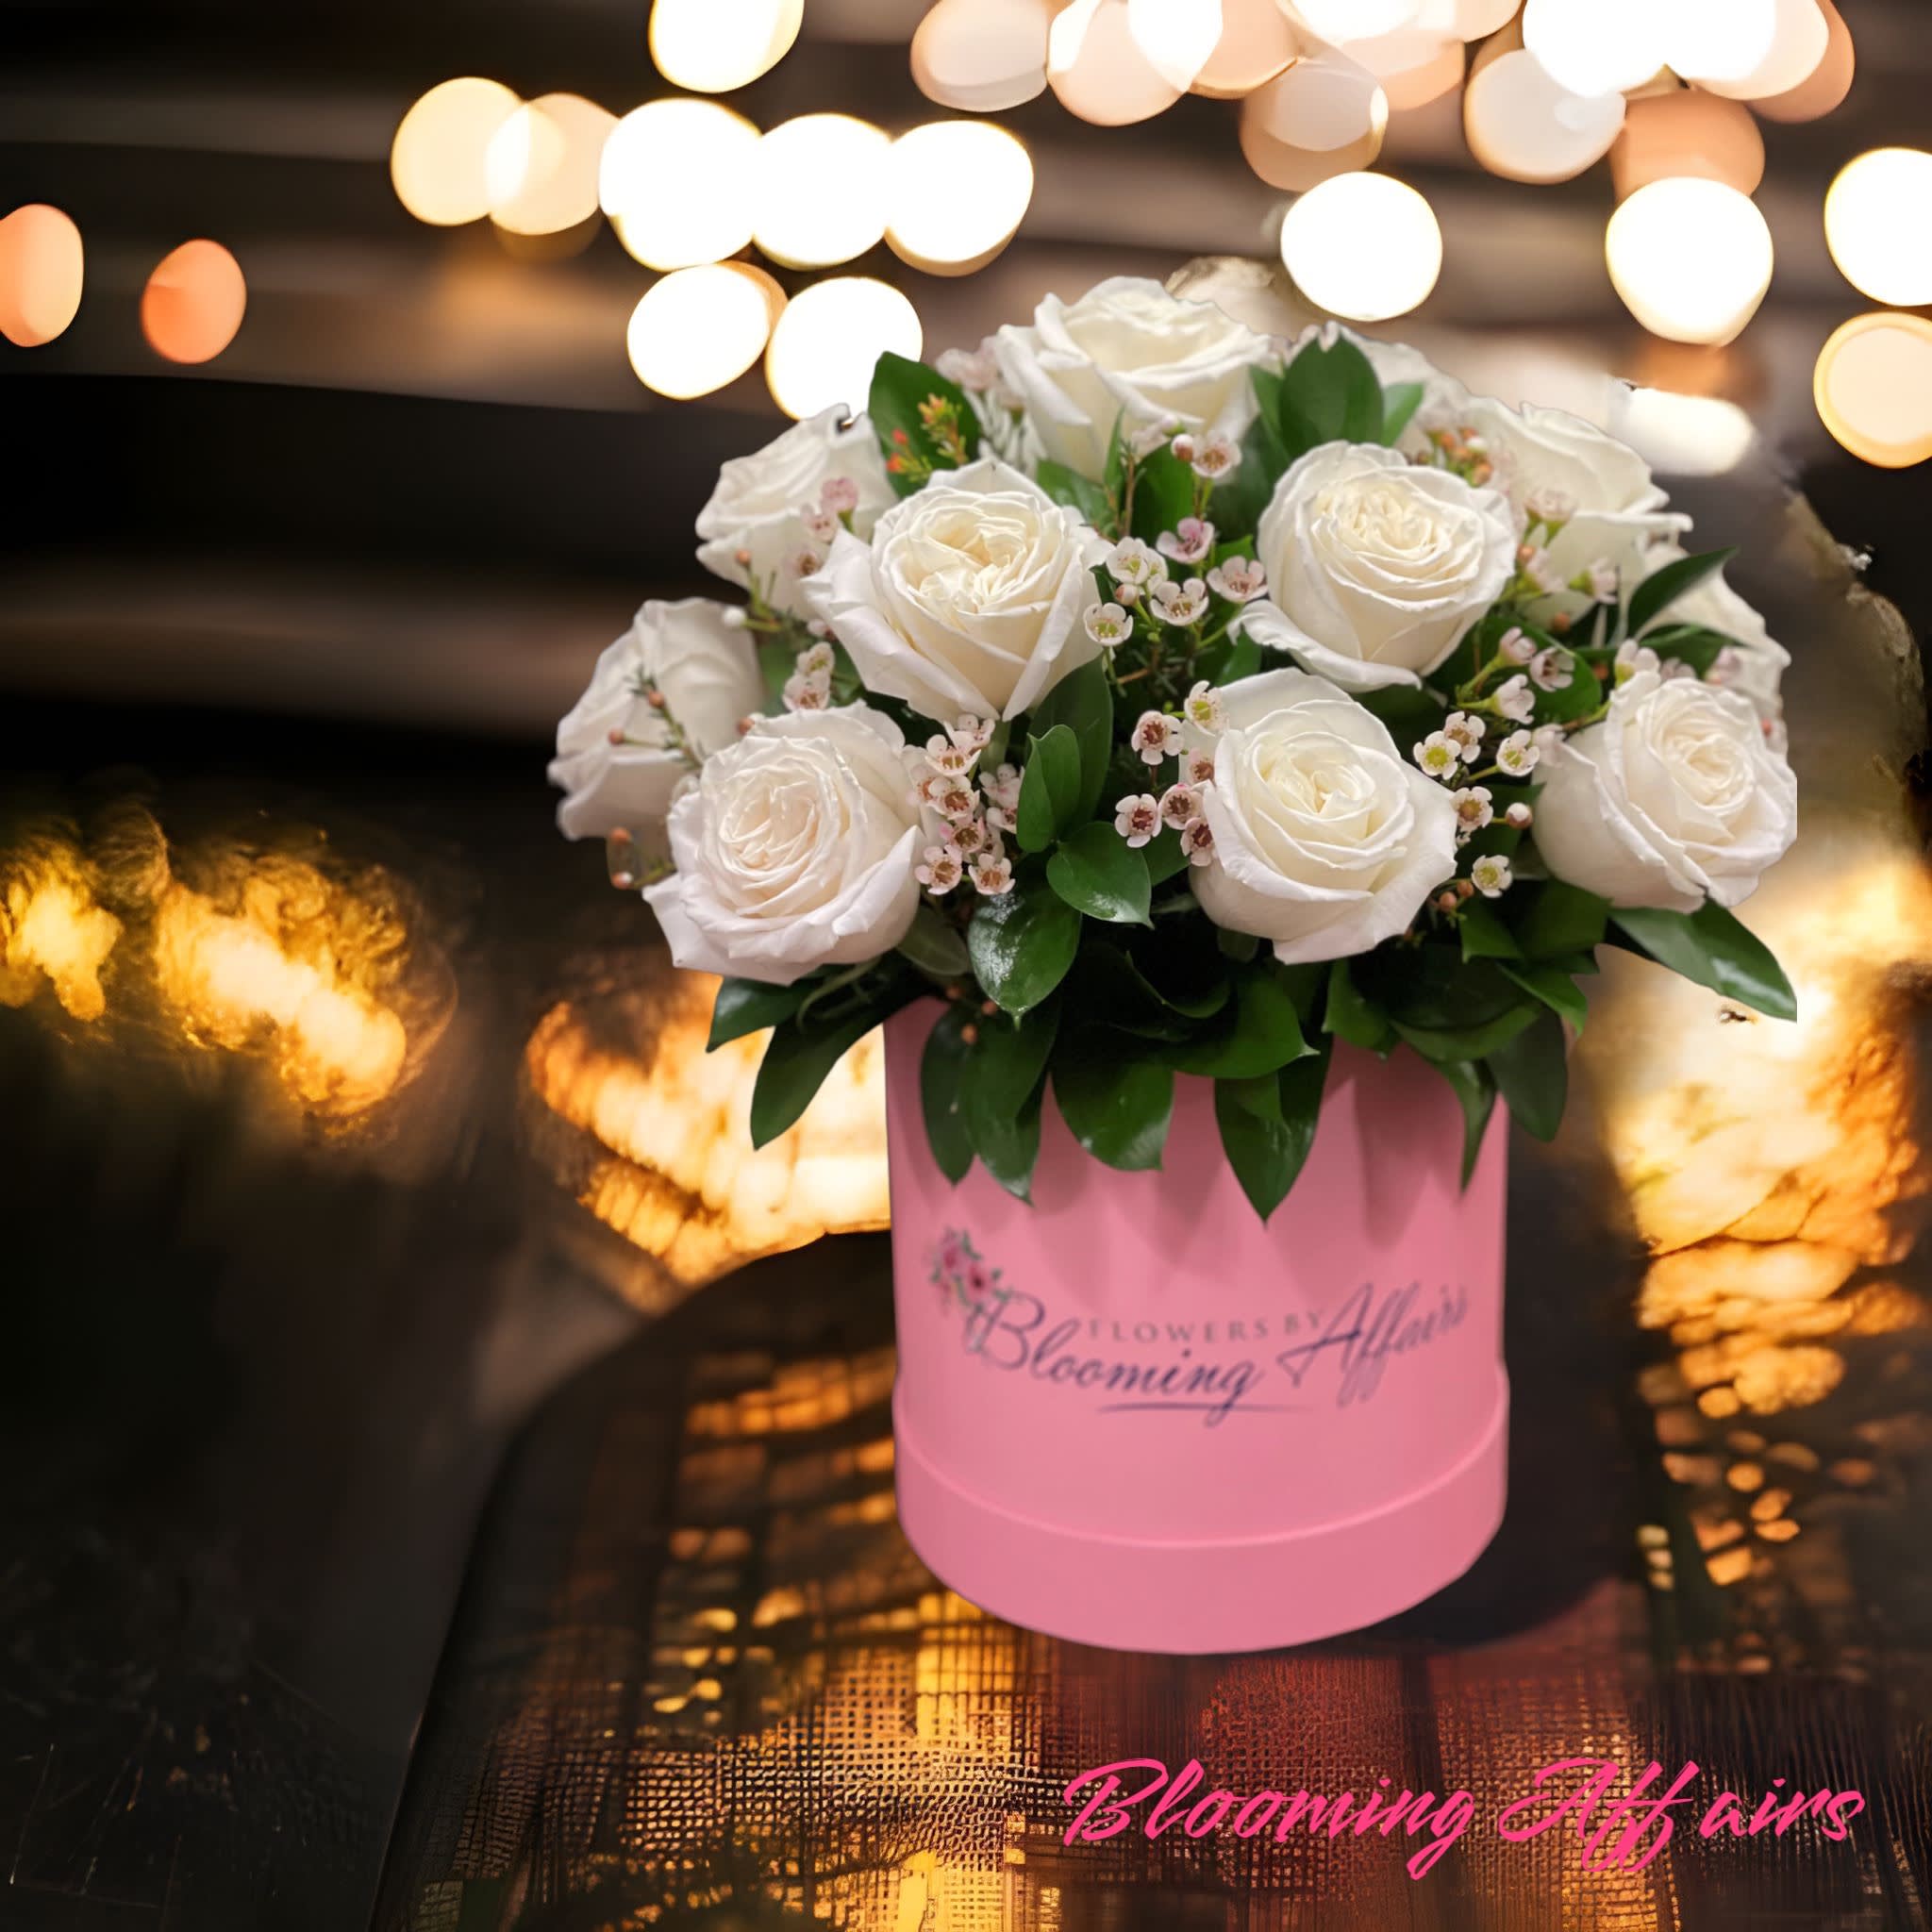 Bloom1201 | Florist Manhattan NYC - White Roses in an Elegant Box